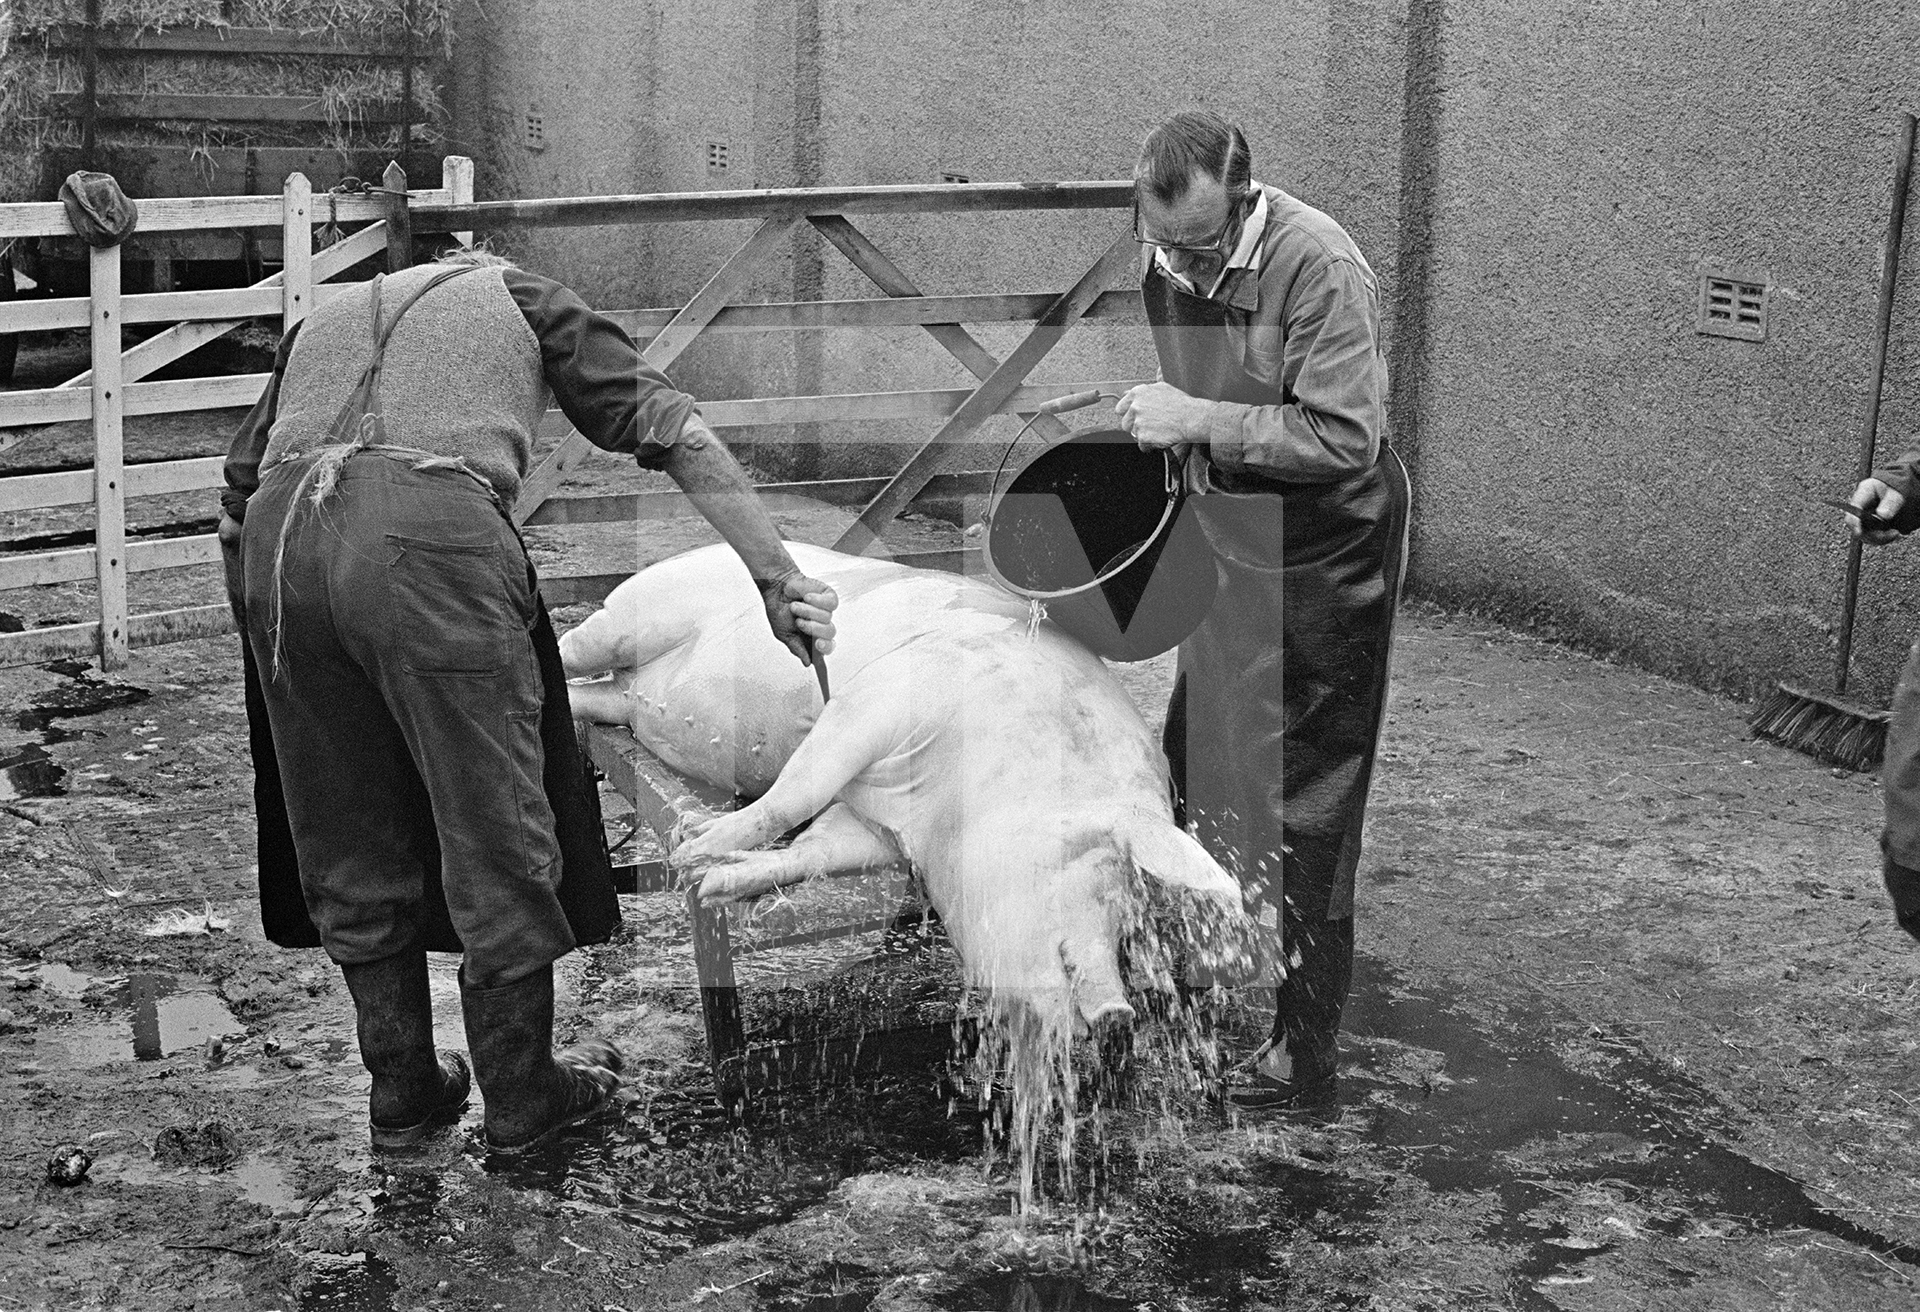 Washing off. North Yorkshire 1976 by Daniel Meadows